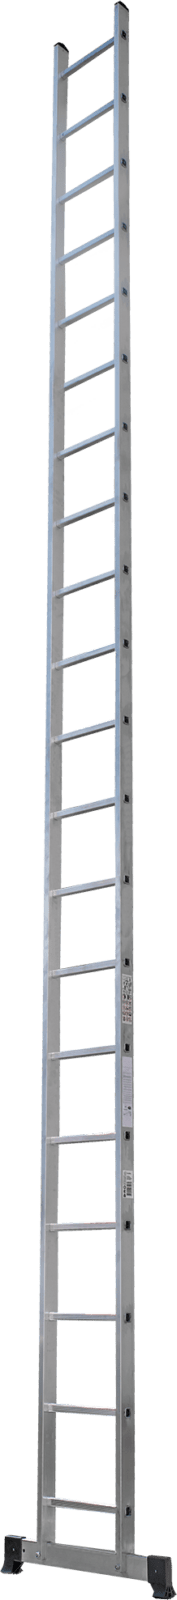 Лестница алюминиевая приставная NV1210 артикул 1210120